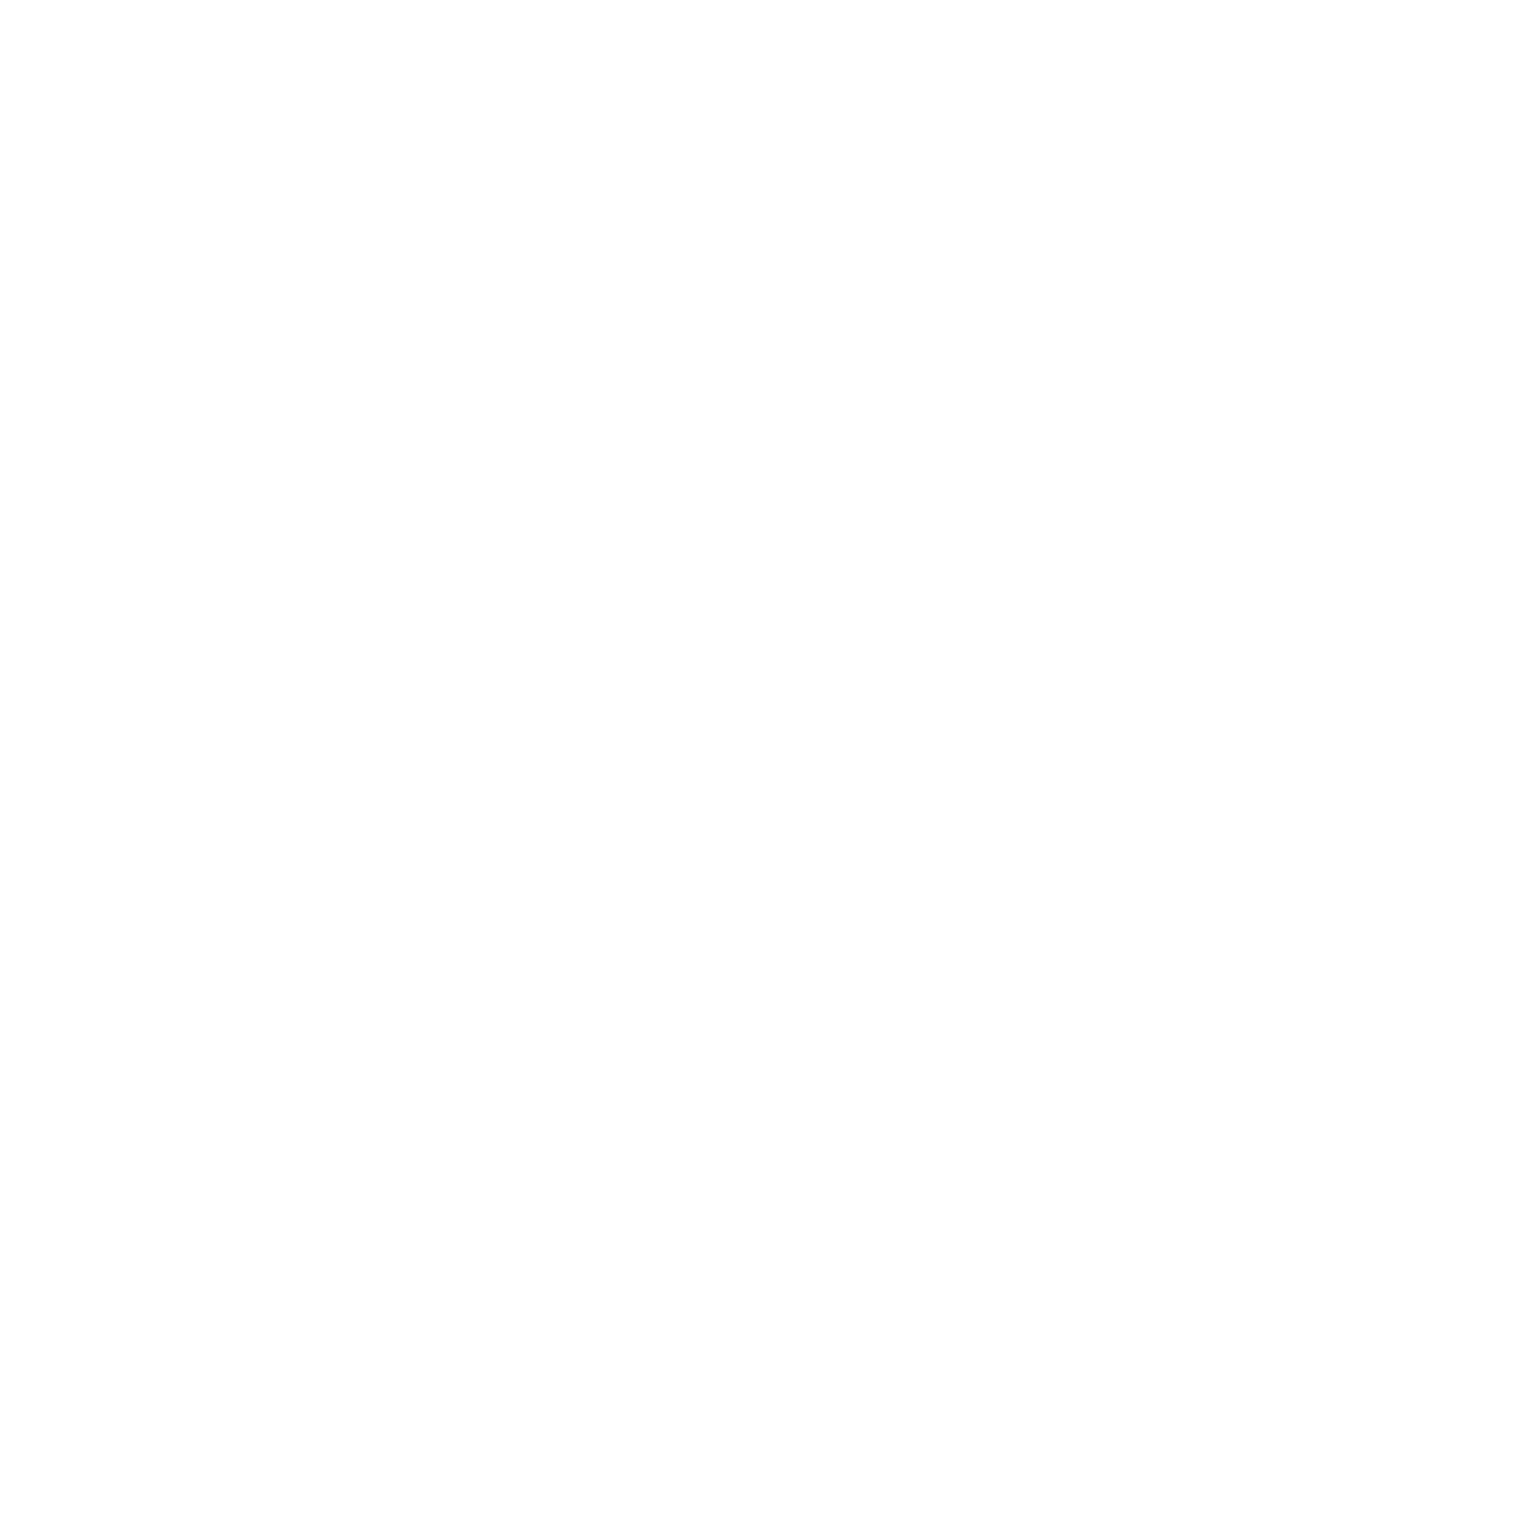 TENSOSS Engineering